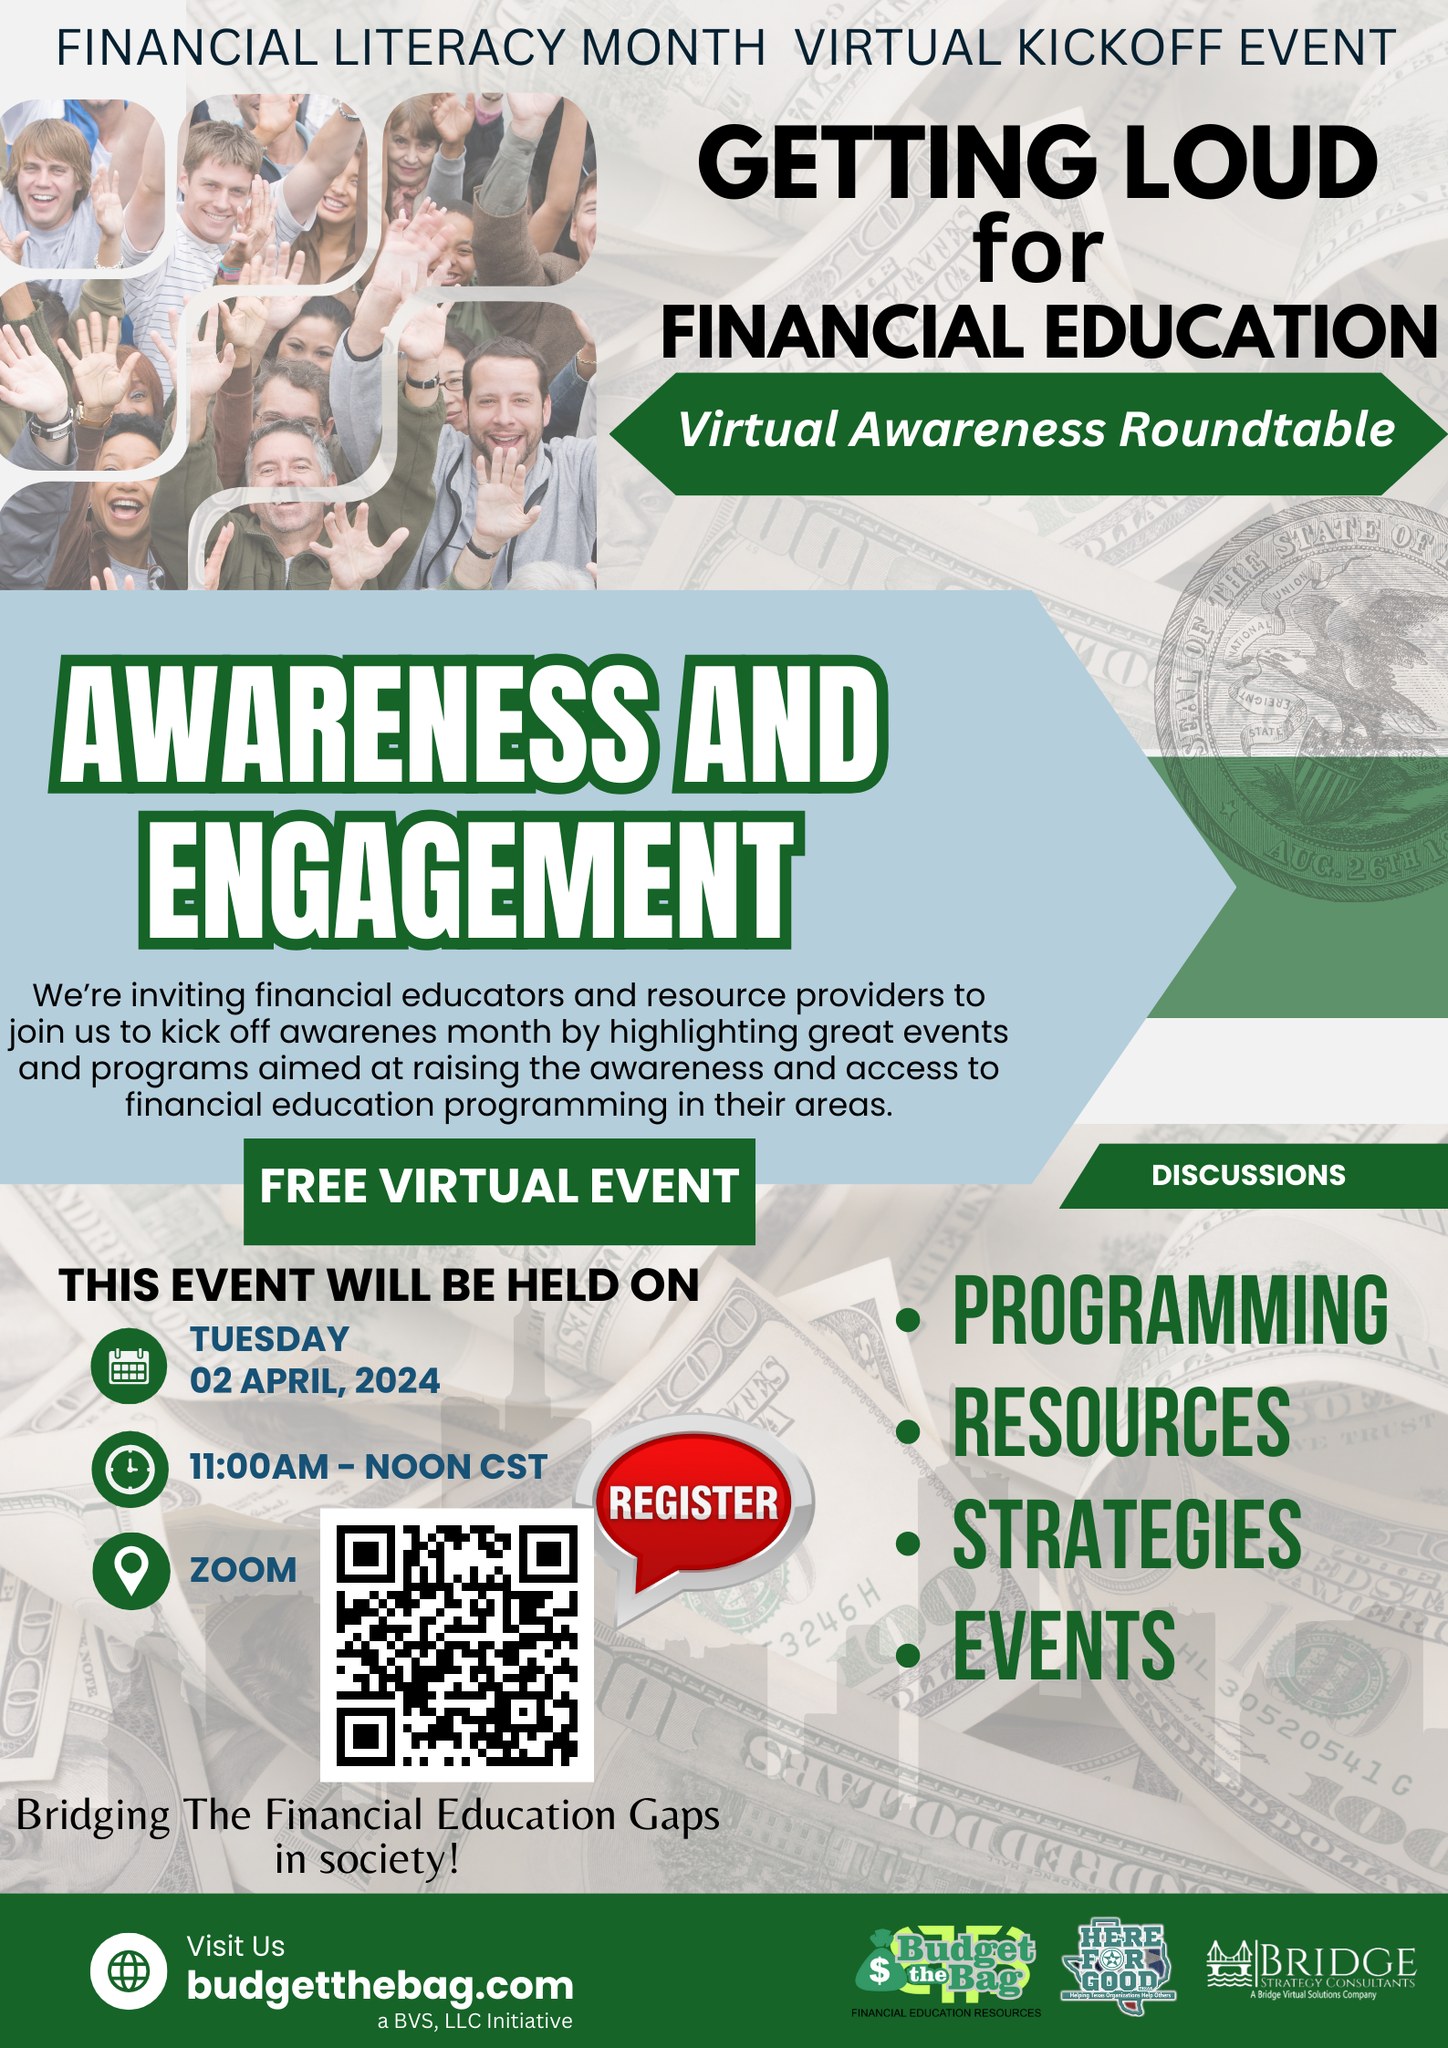 Get "LOUD" for Financial Education Virtual Kickoff